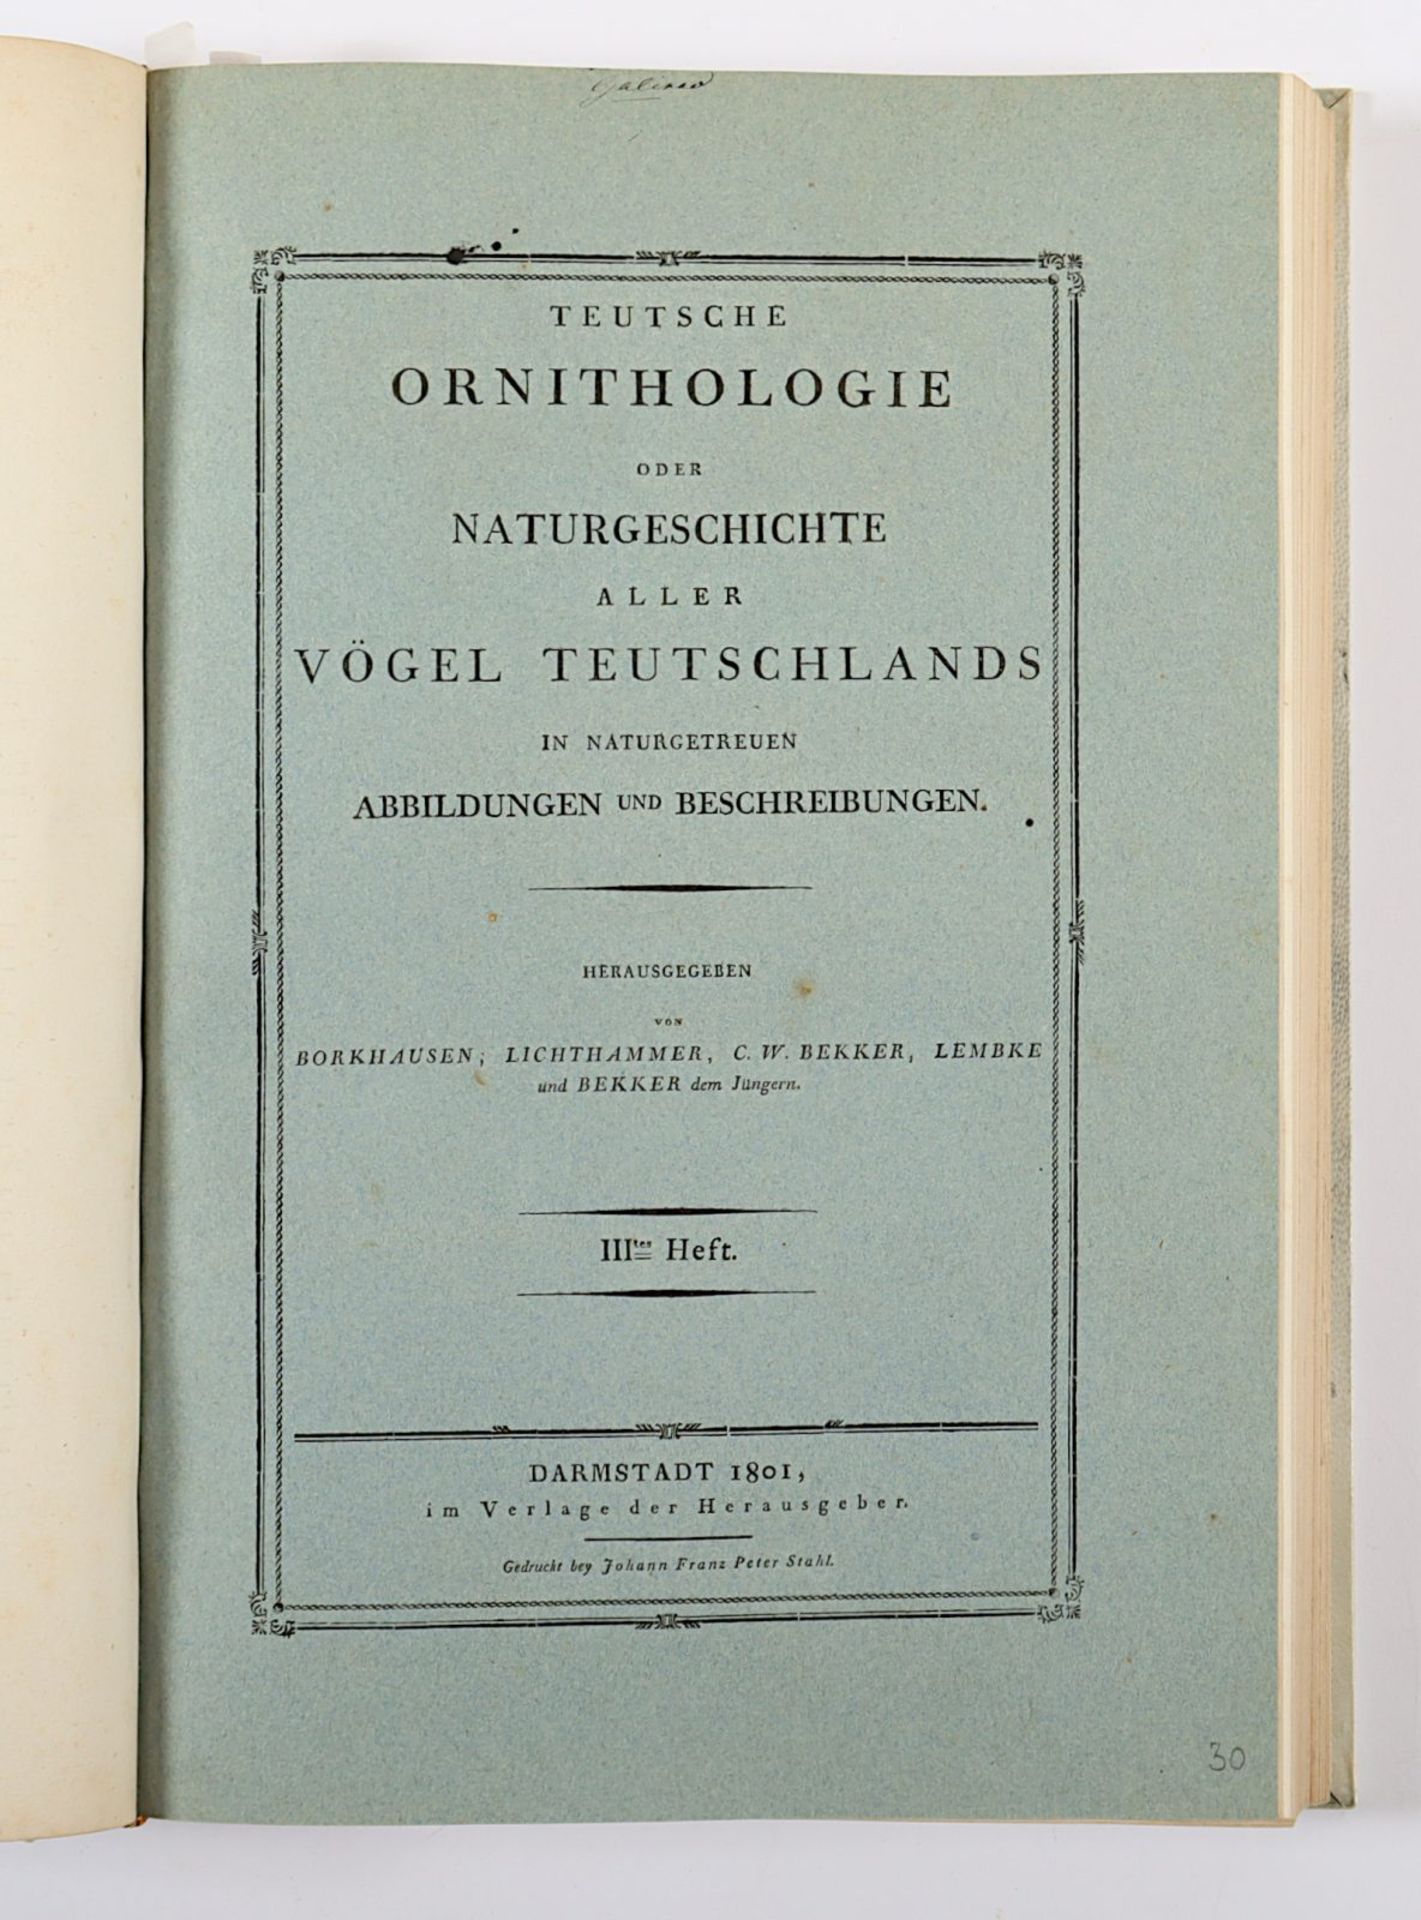 Teutsche Ornithologie, oder Naturgeschichte aller Vögel Teutschlands - Image 4 of 13